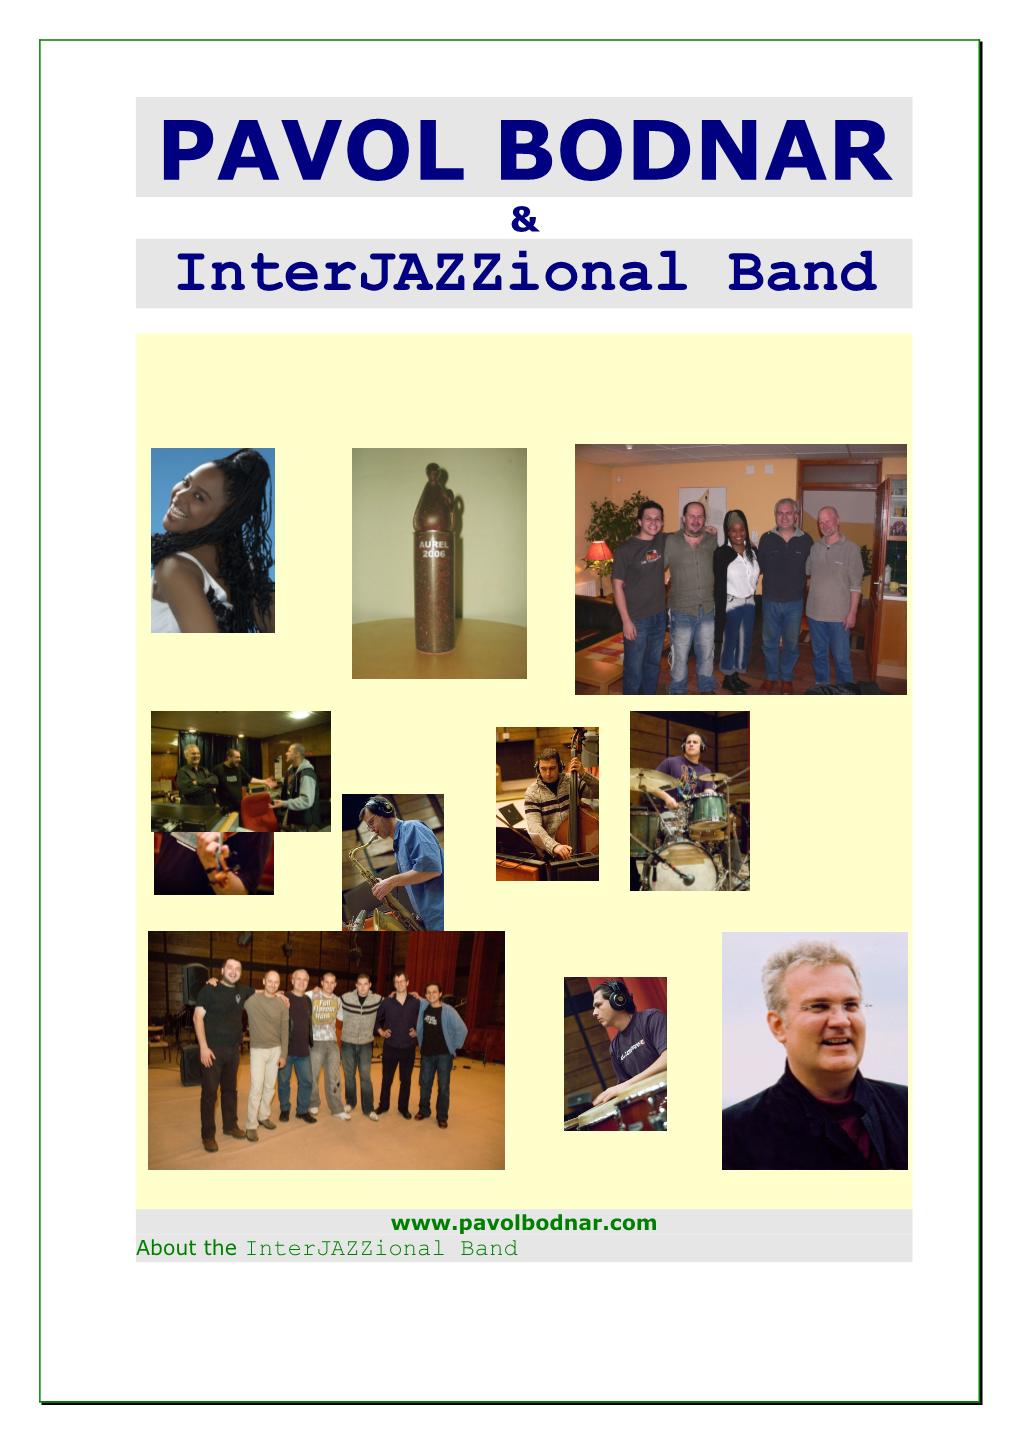 Interjazzional Band